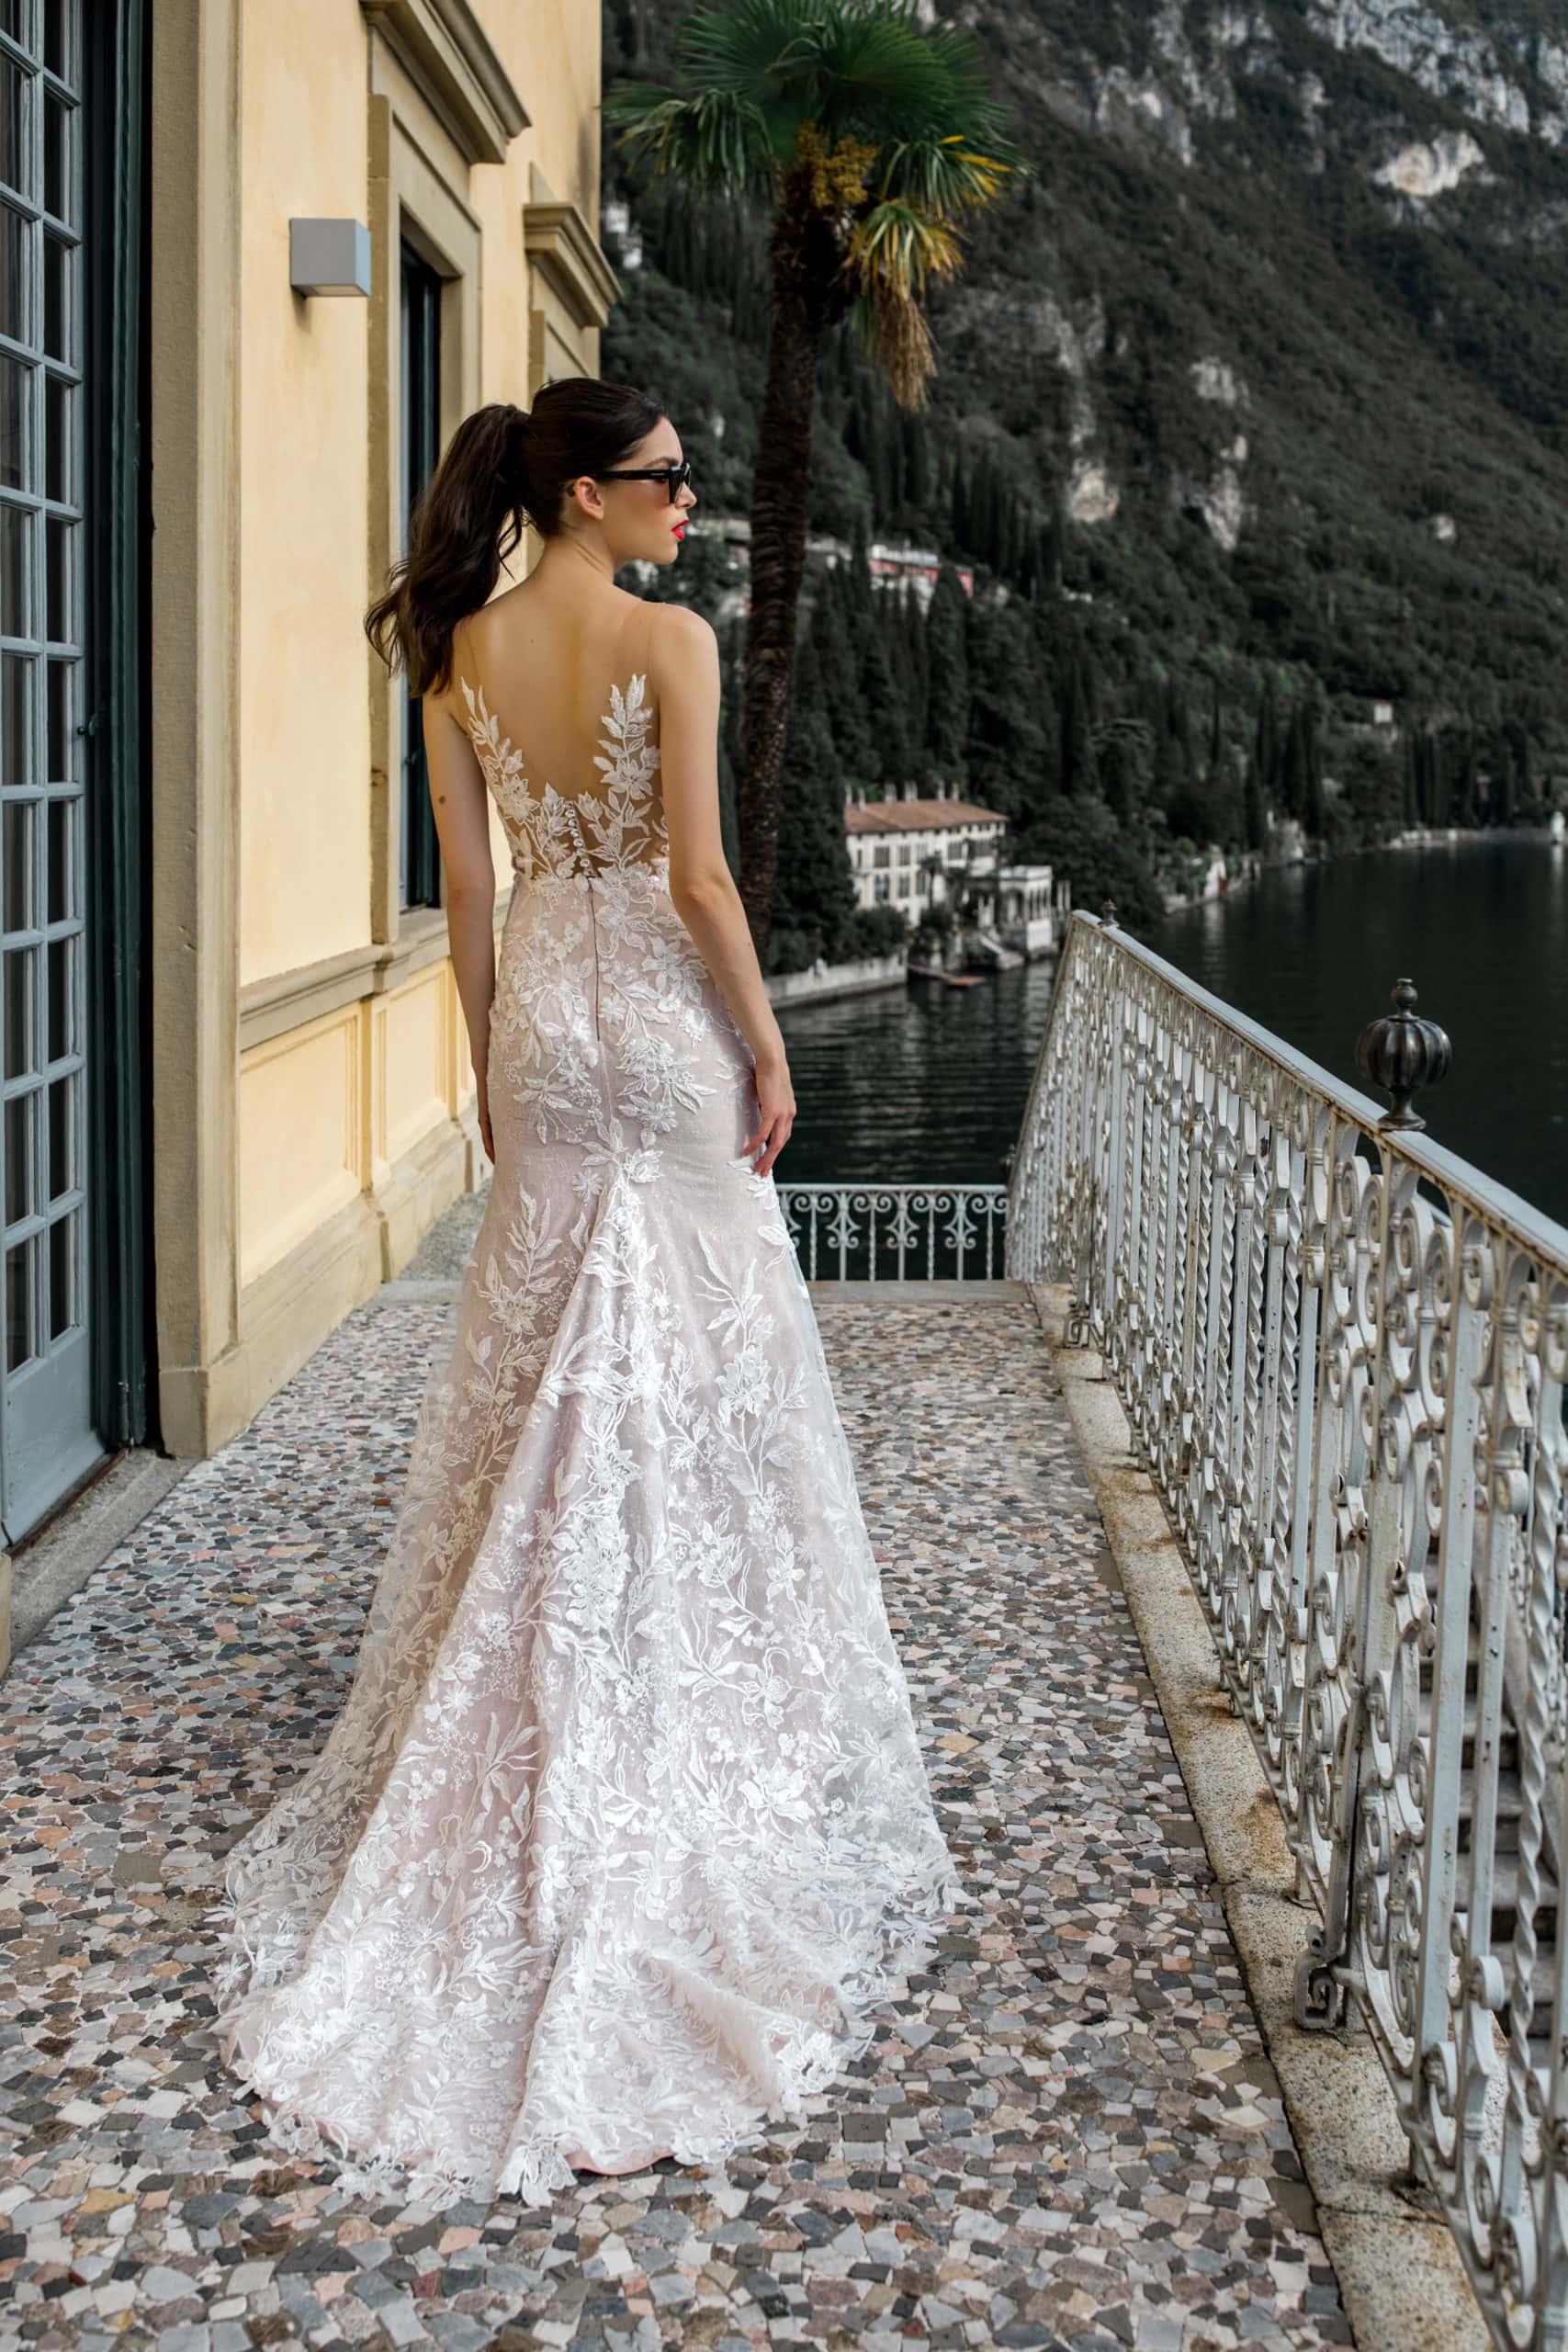 Model walks at Villa Cipressi wearing wedding dress